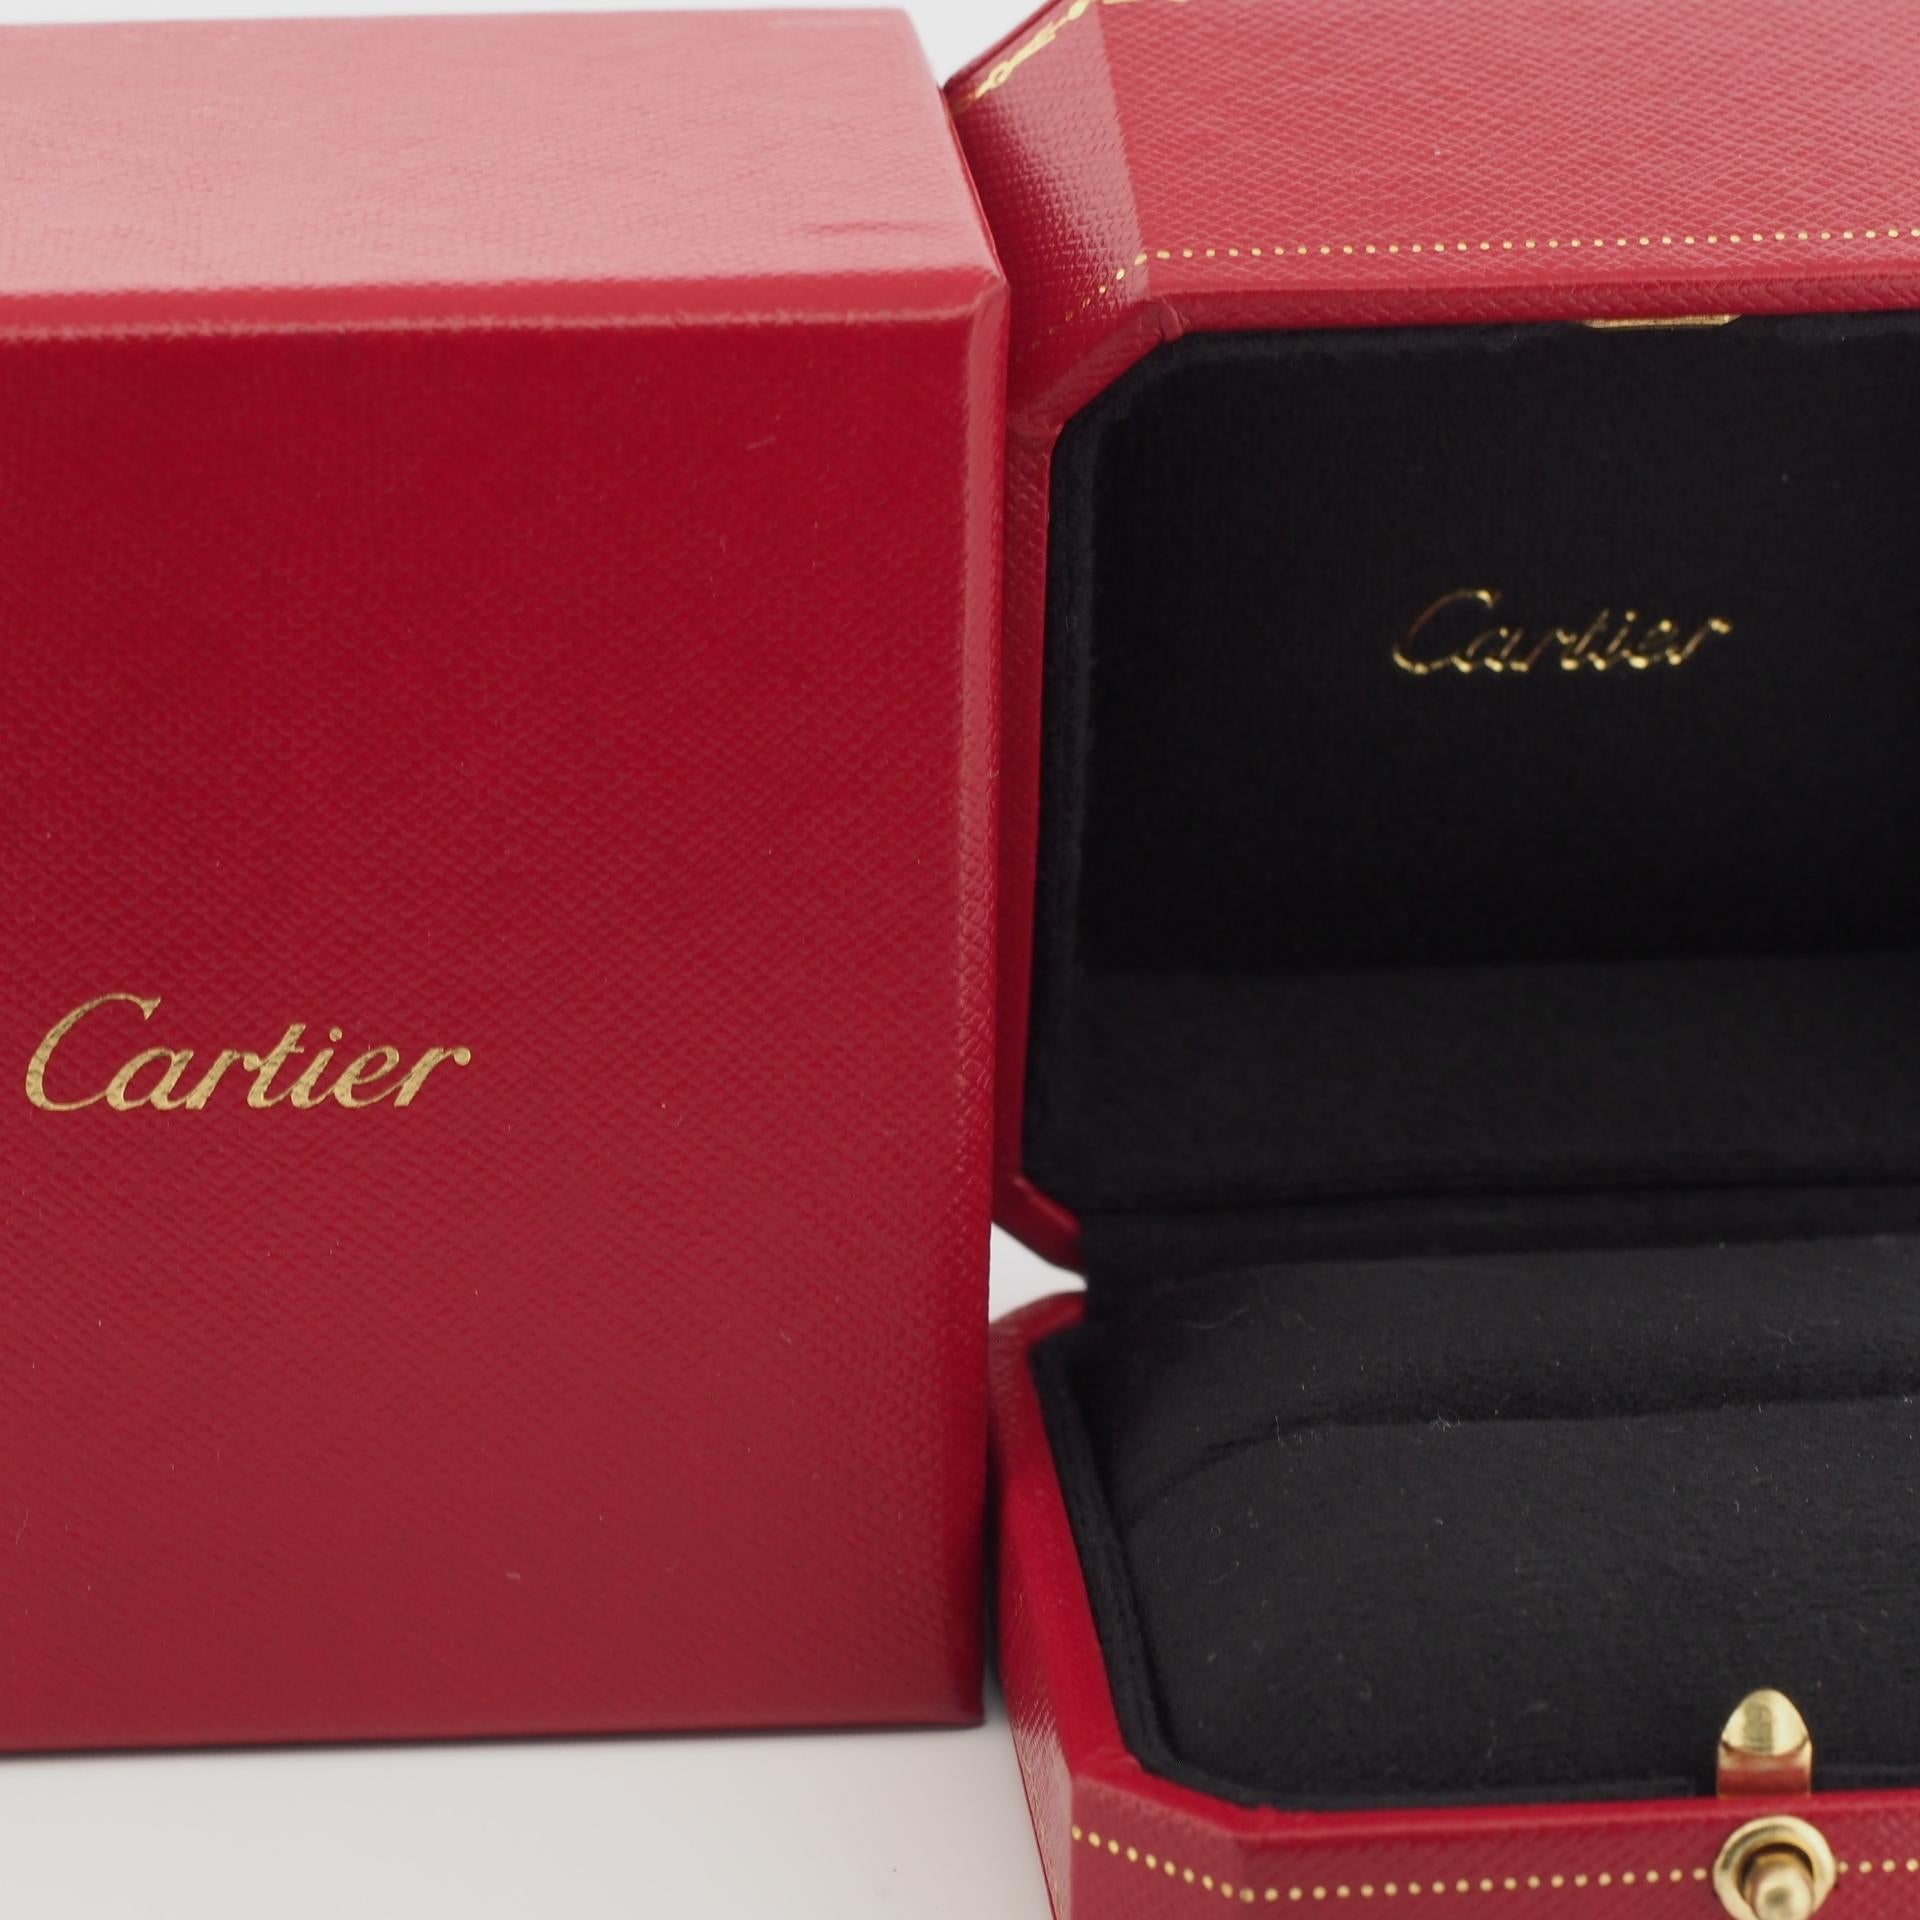 Cartier Ballerine Solitaire 0.32ct Diamond Engagement Ring Pt 51 For Sale 4